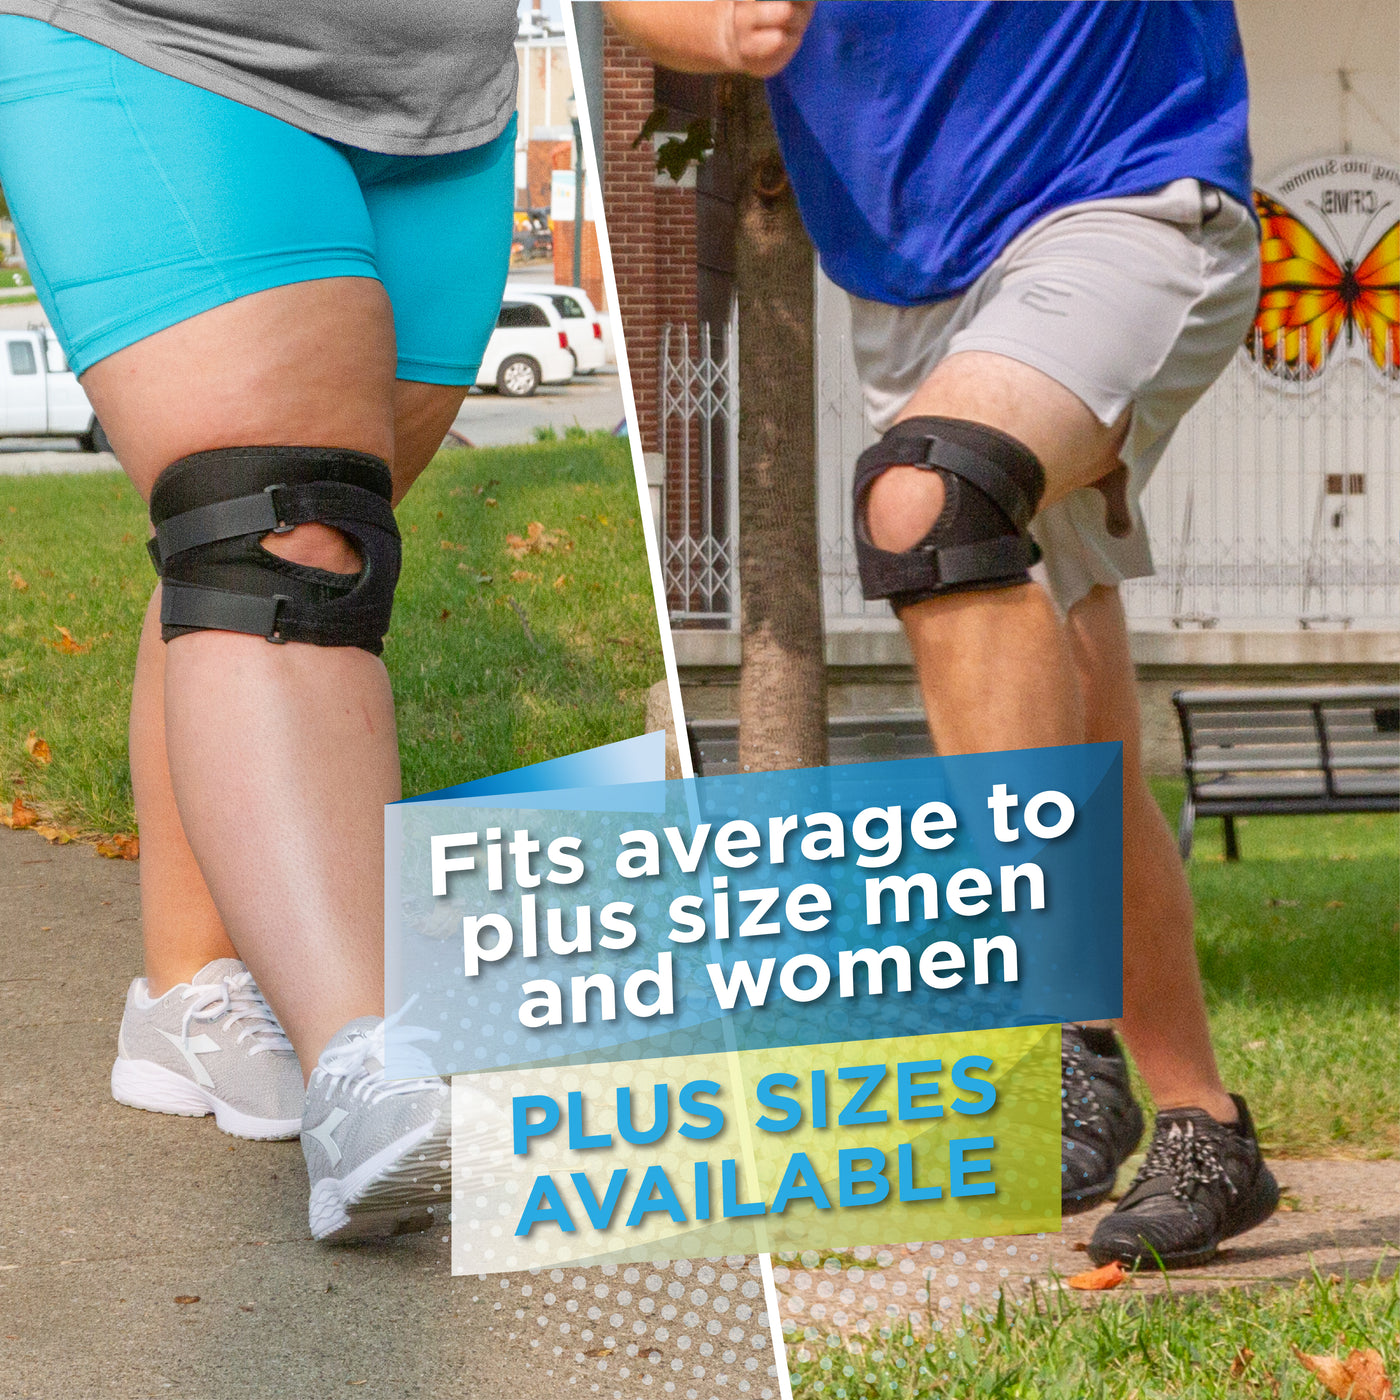 The plus size xxl patella tracking knee brace fits average to plus size men and women